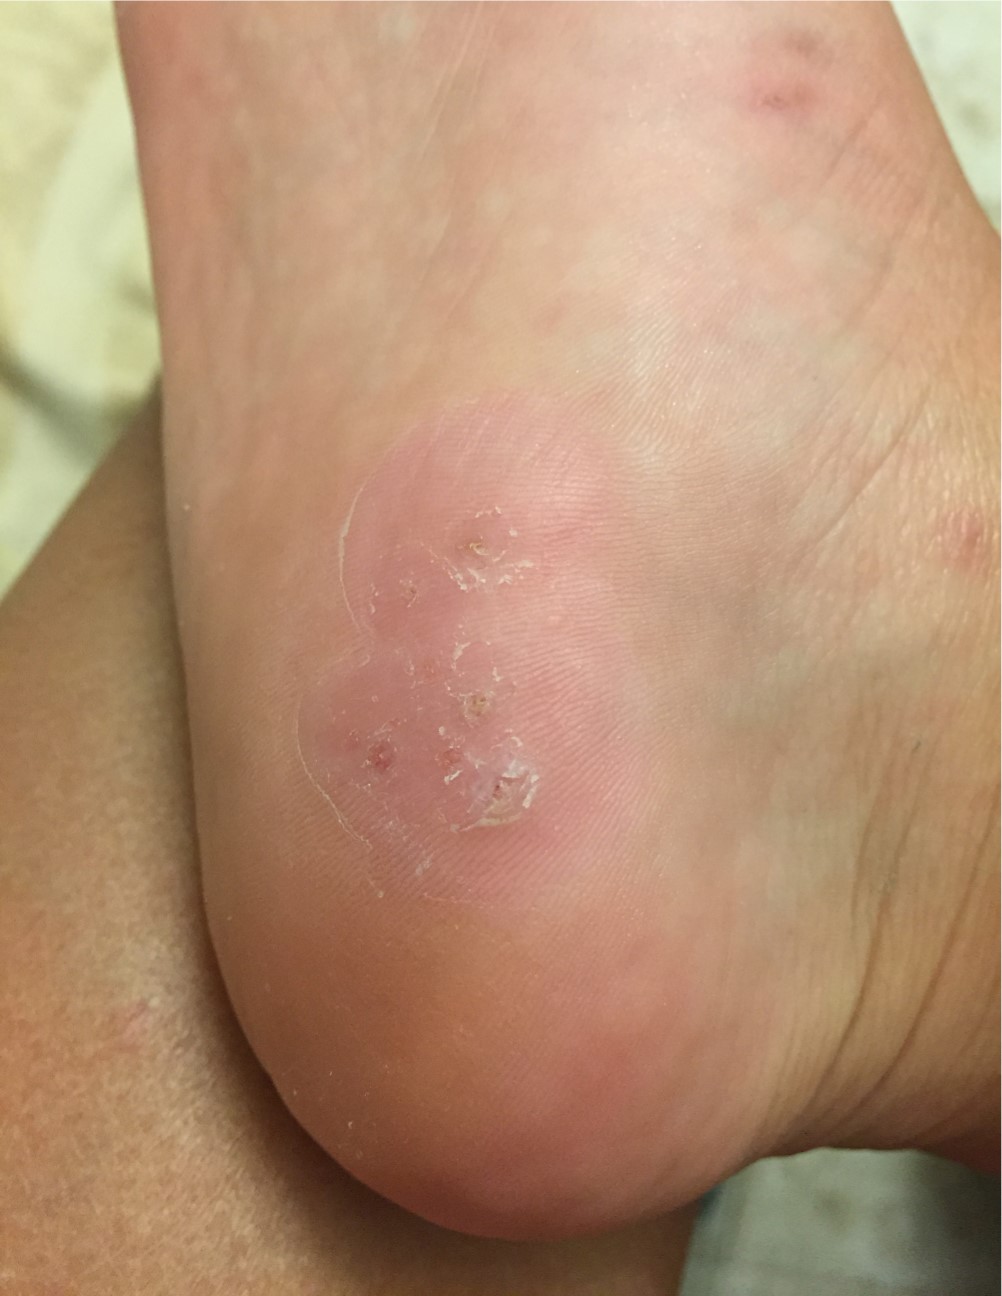 Wart on foot not painful. Wart causing foot pain